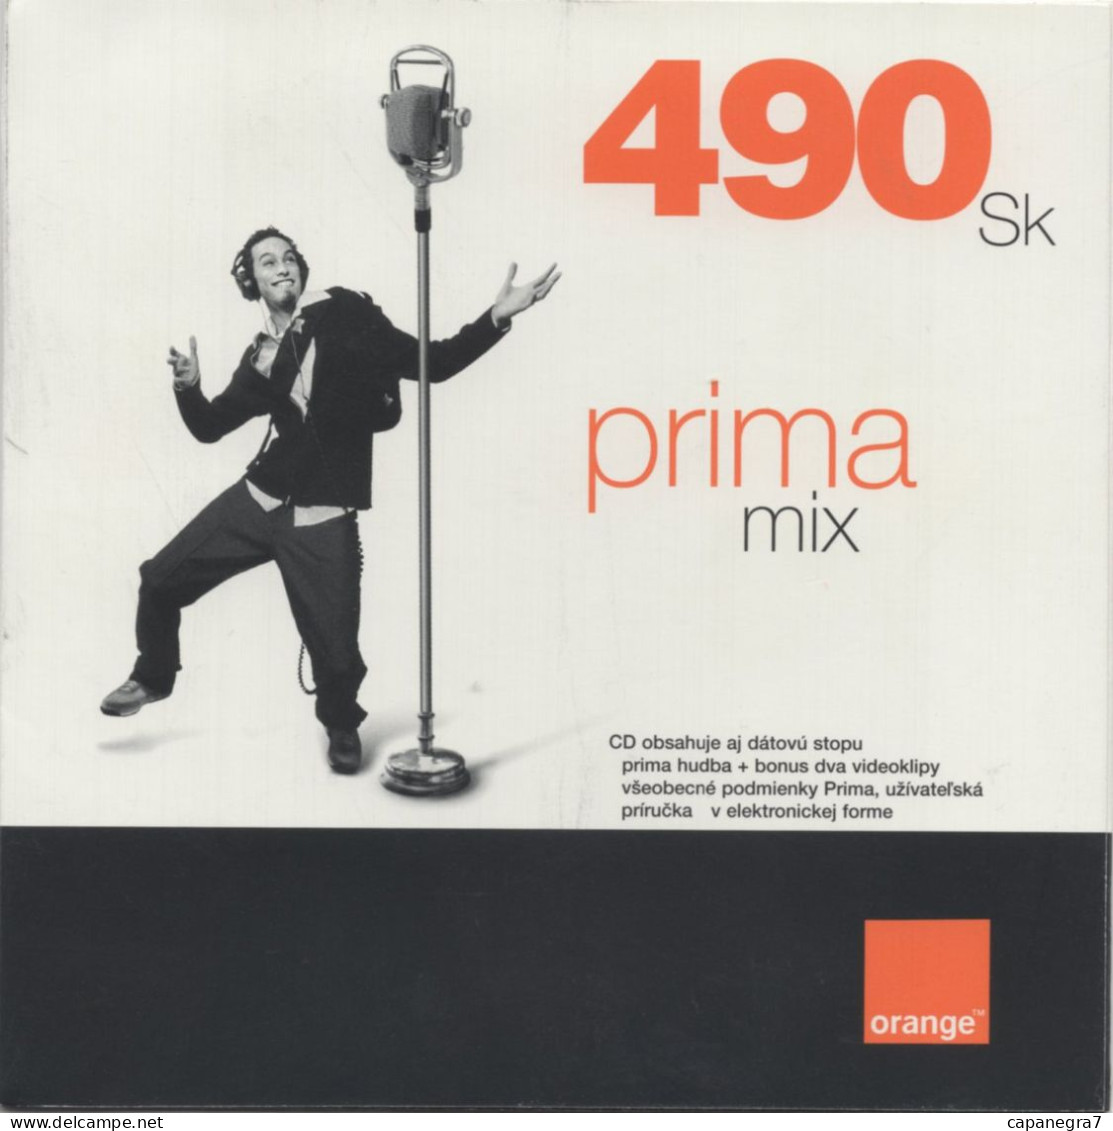 Prima Selection, Prima Mix 490 Sk, Polycarbonate Plastic CD, GSM Refill, Orange Slovakia, Validity 30.06.2004, Slovakia - Slovakia